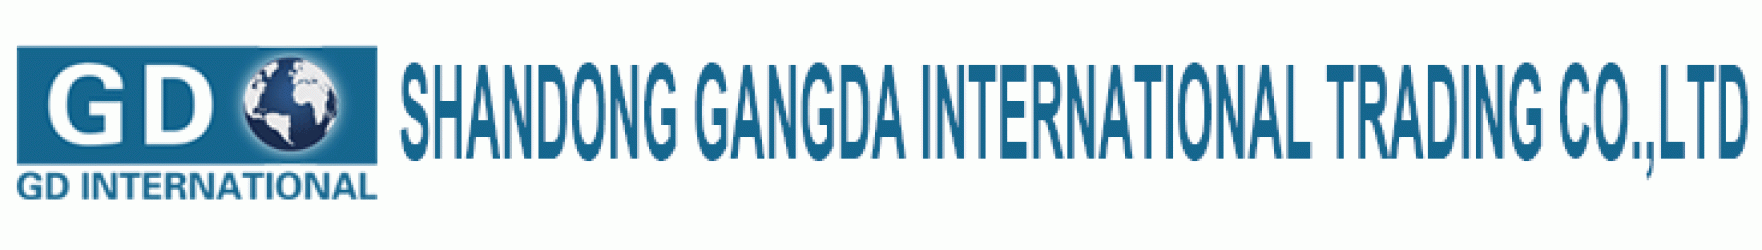 Shandong Gangda International Trading Co. Limited